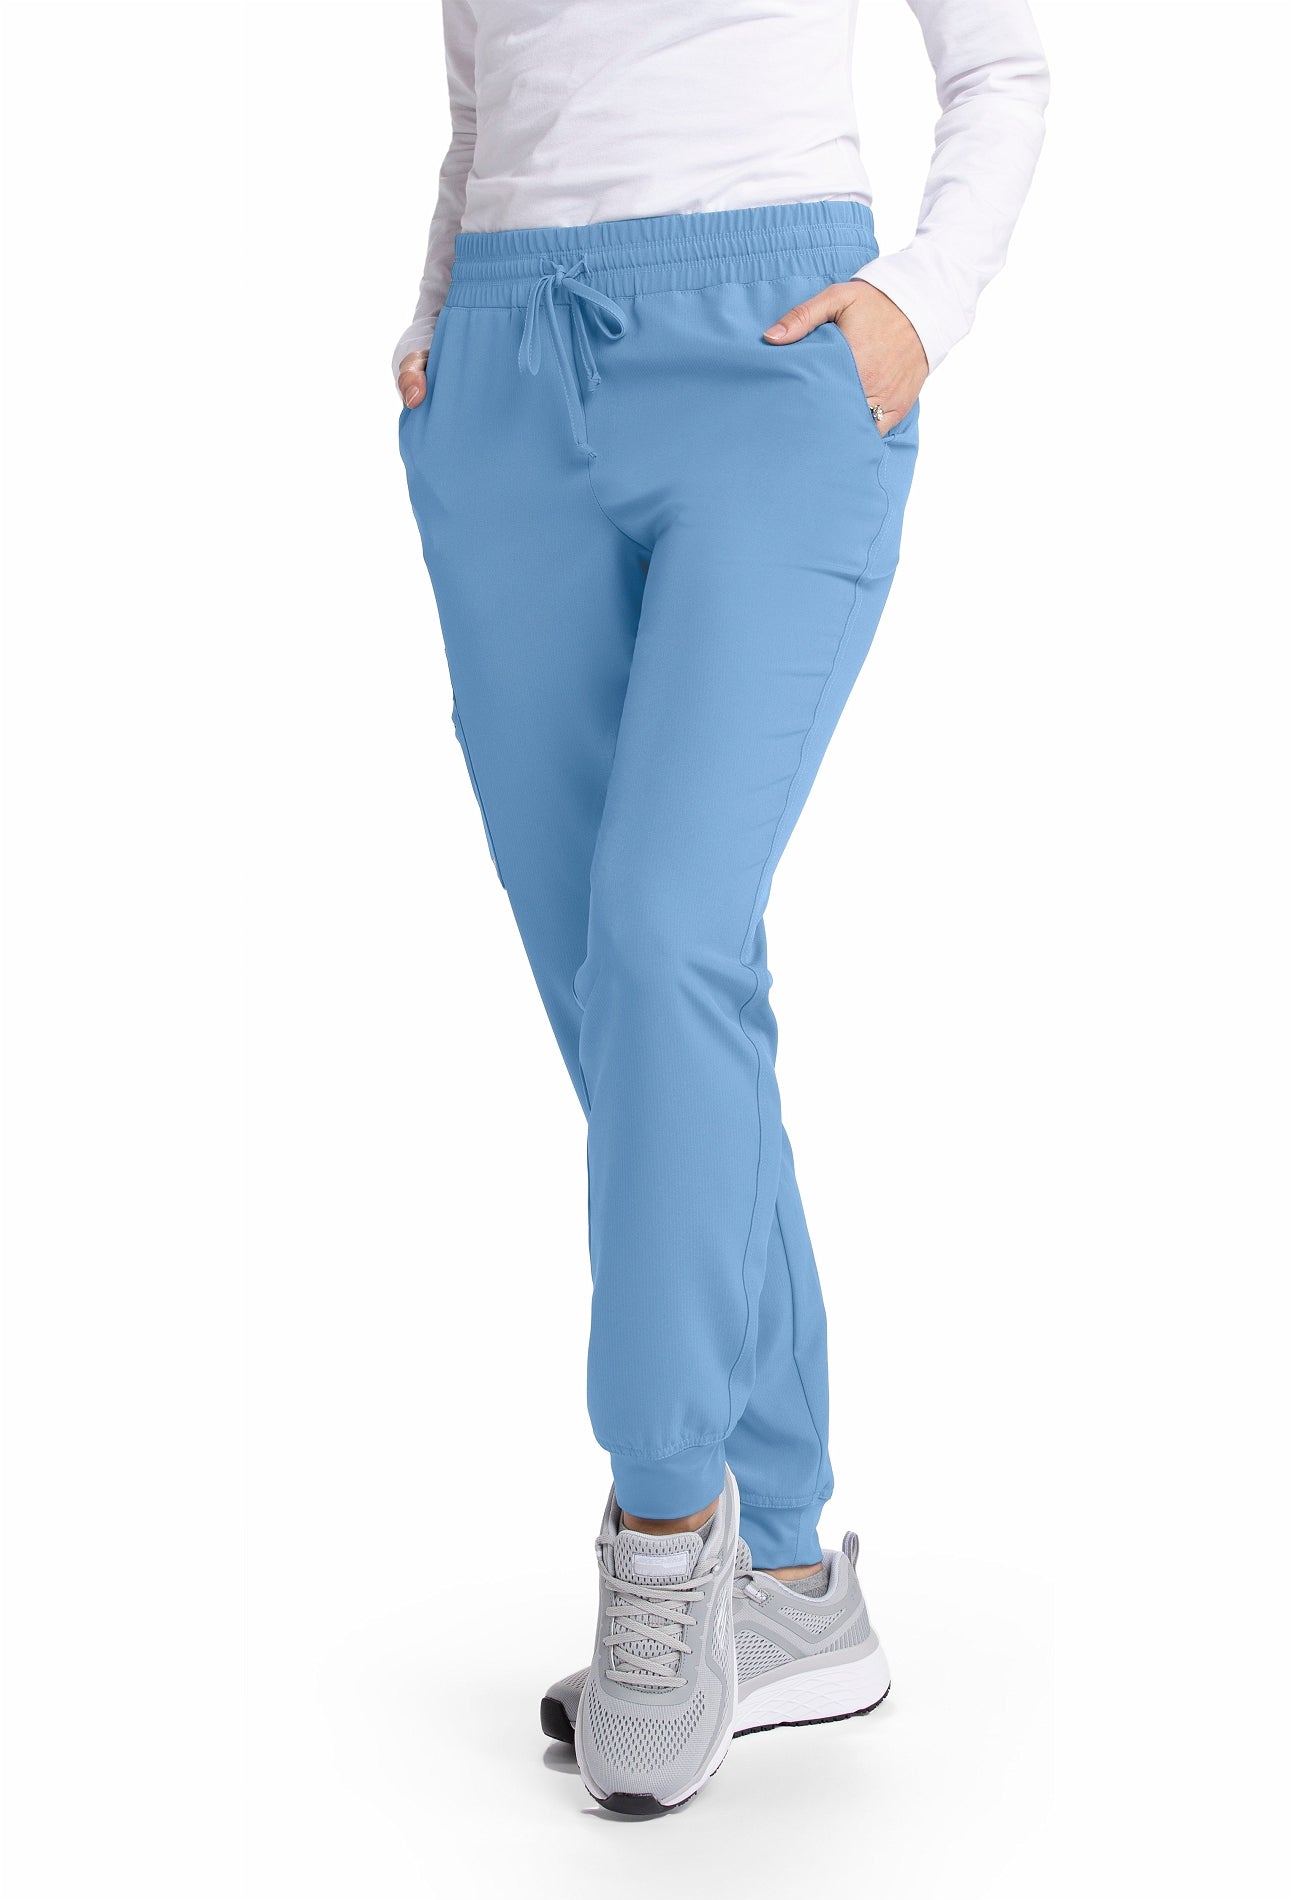 Grey's Anatomy Women's Theory 4-Pocket Drawcord Jogger_Ceil Blue - Work World - Workwear, Work Boots, Safety Gear